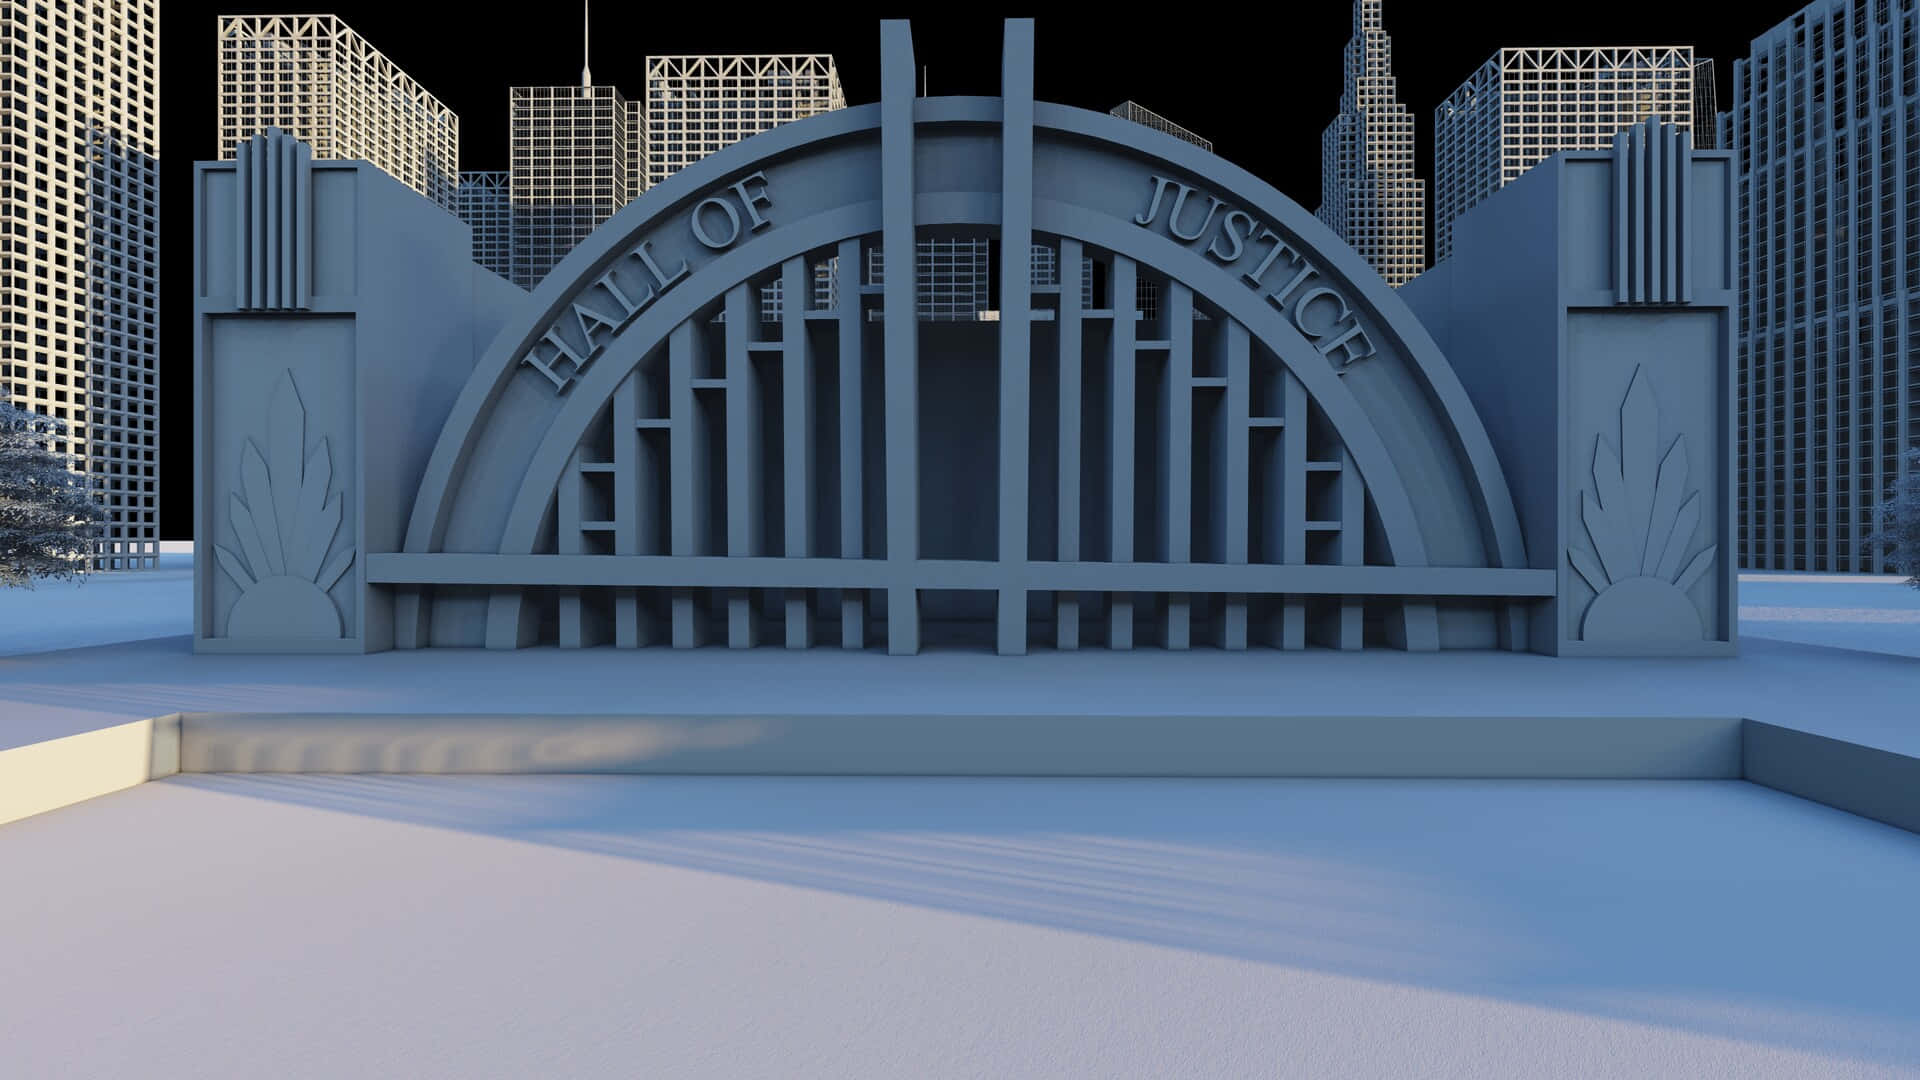 A 3d Model Of A City Gate